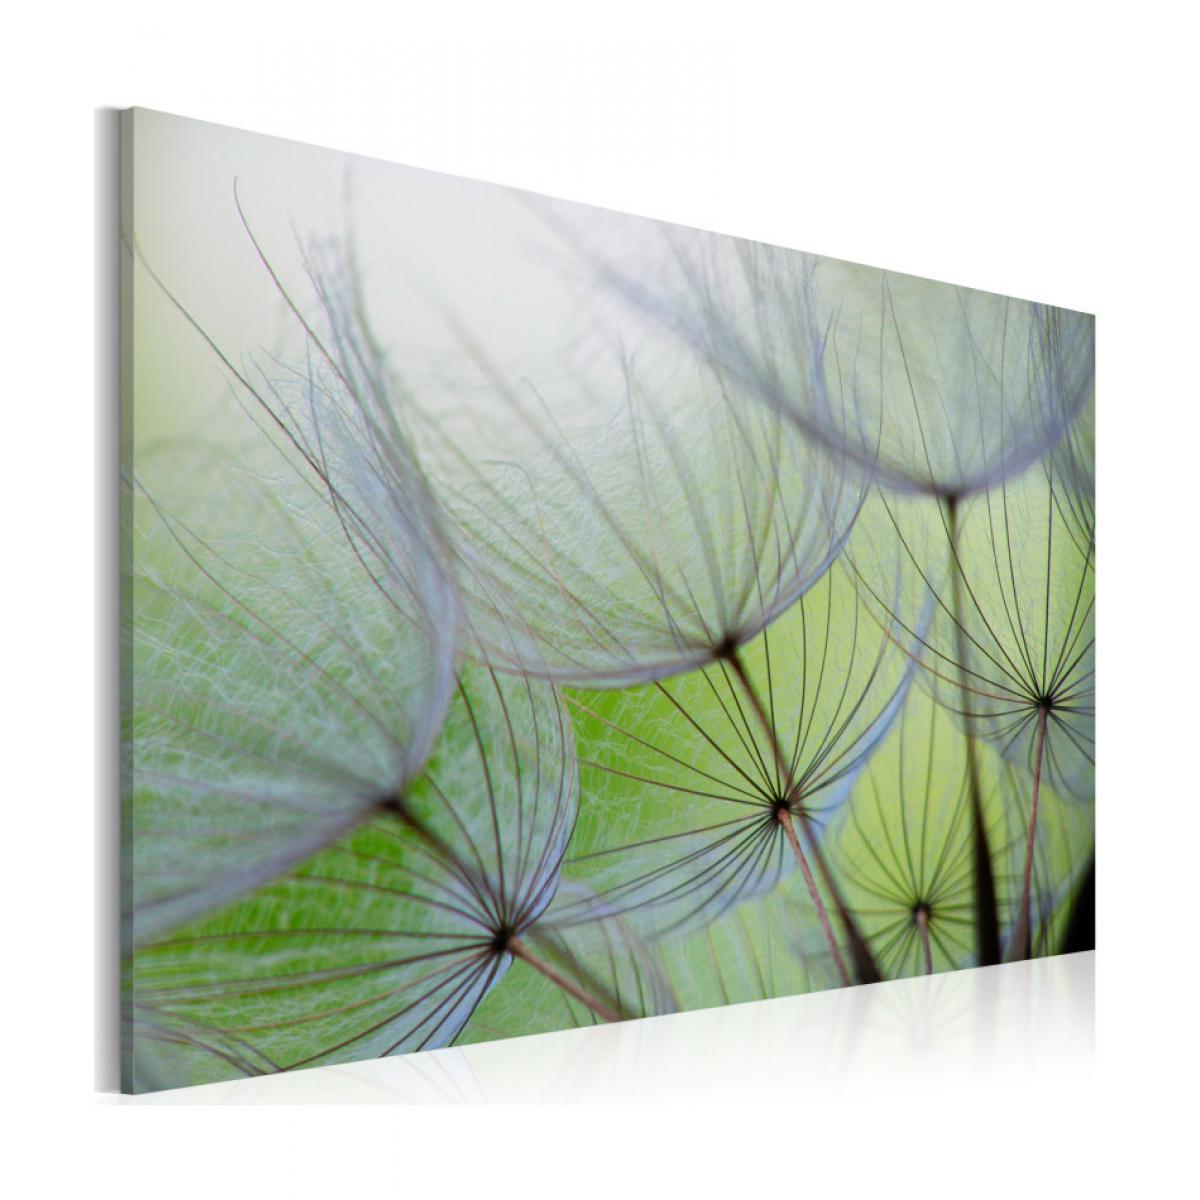 Artgeist - Tableau - Dandelion in the wind 120x80 - Tableaux, peintures